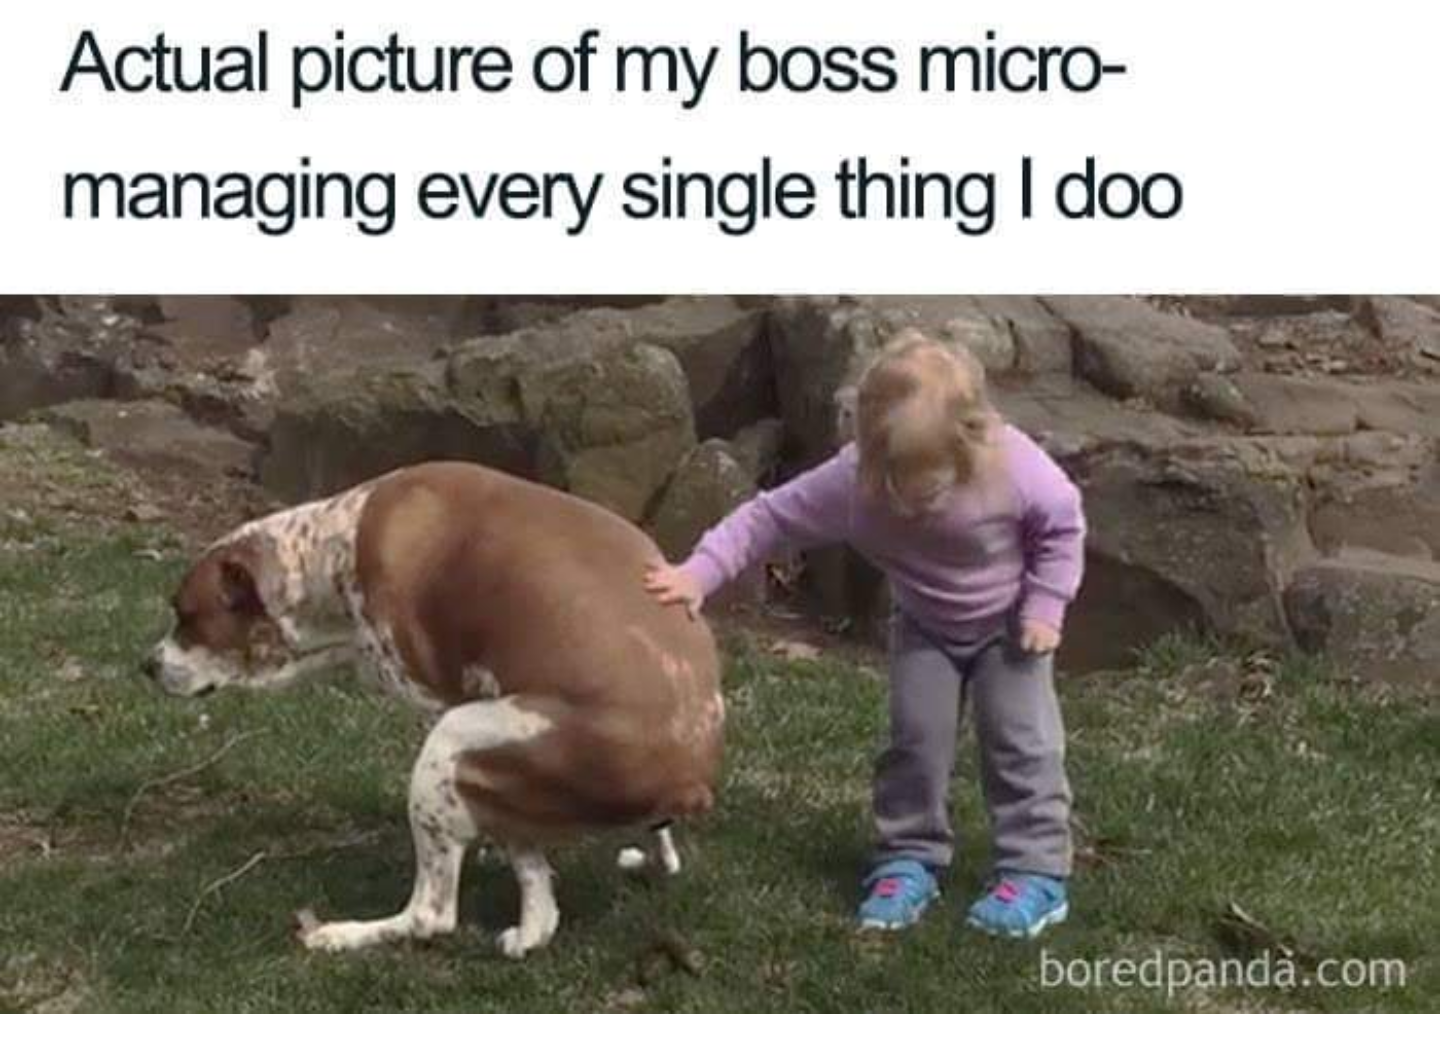 micromanaging boss memes - Actual picture of my boss micro managing every single thing I doo boredpanda.com